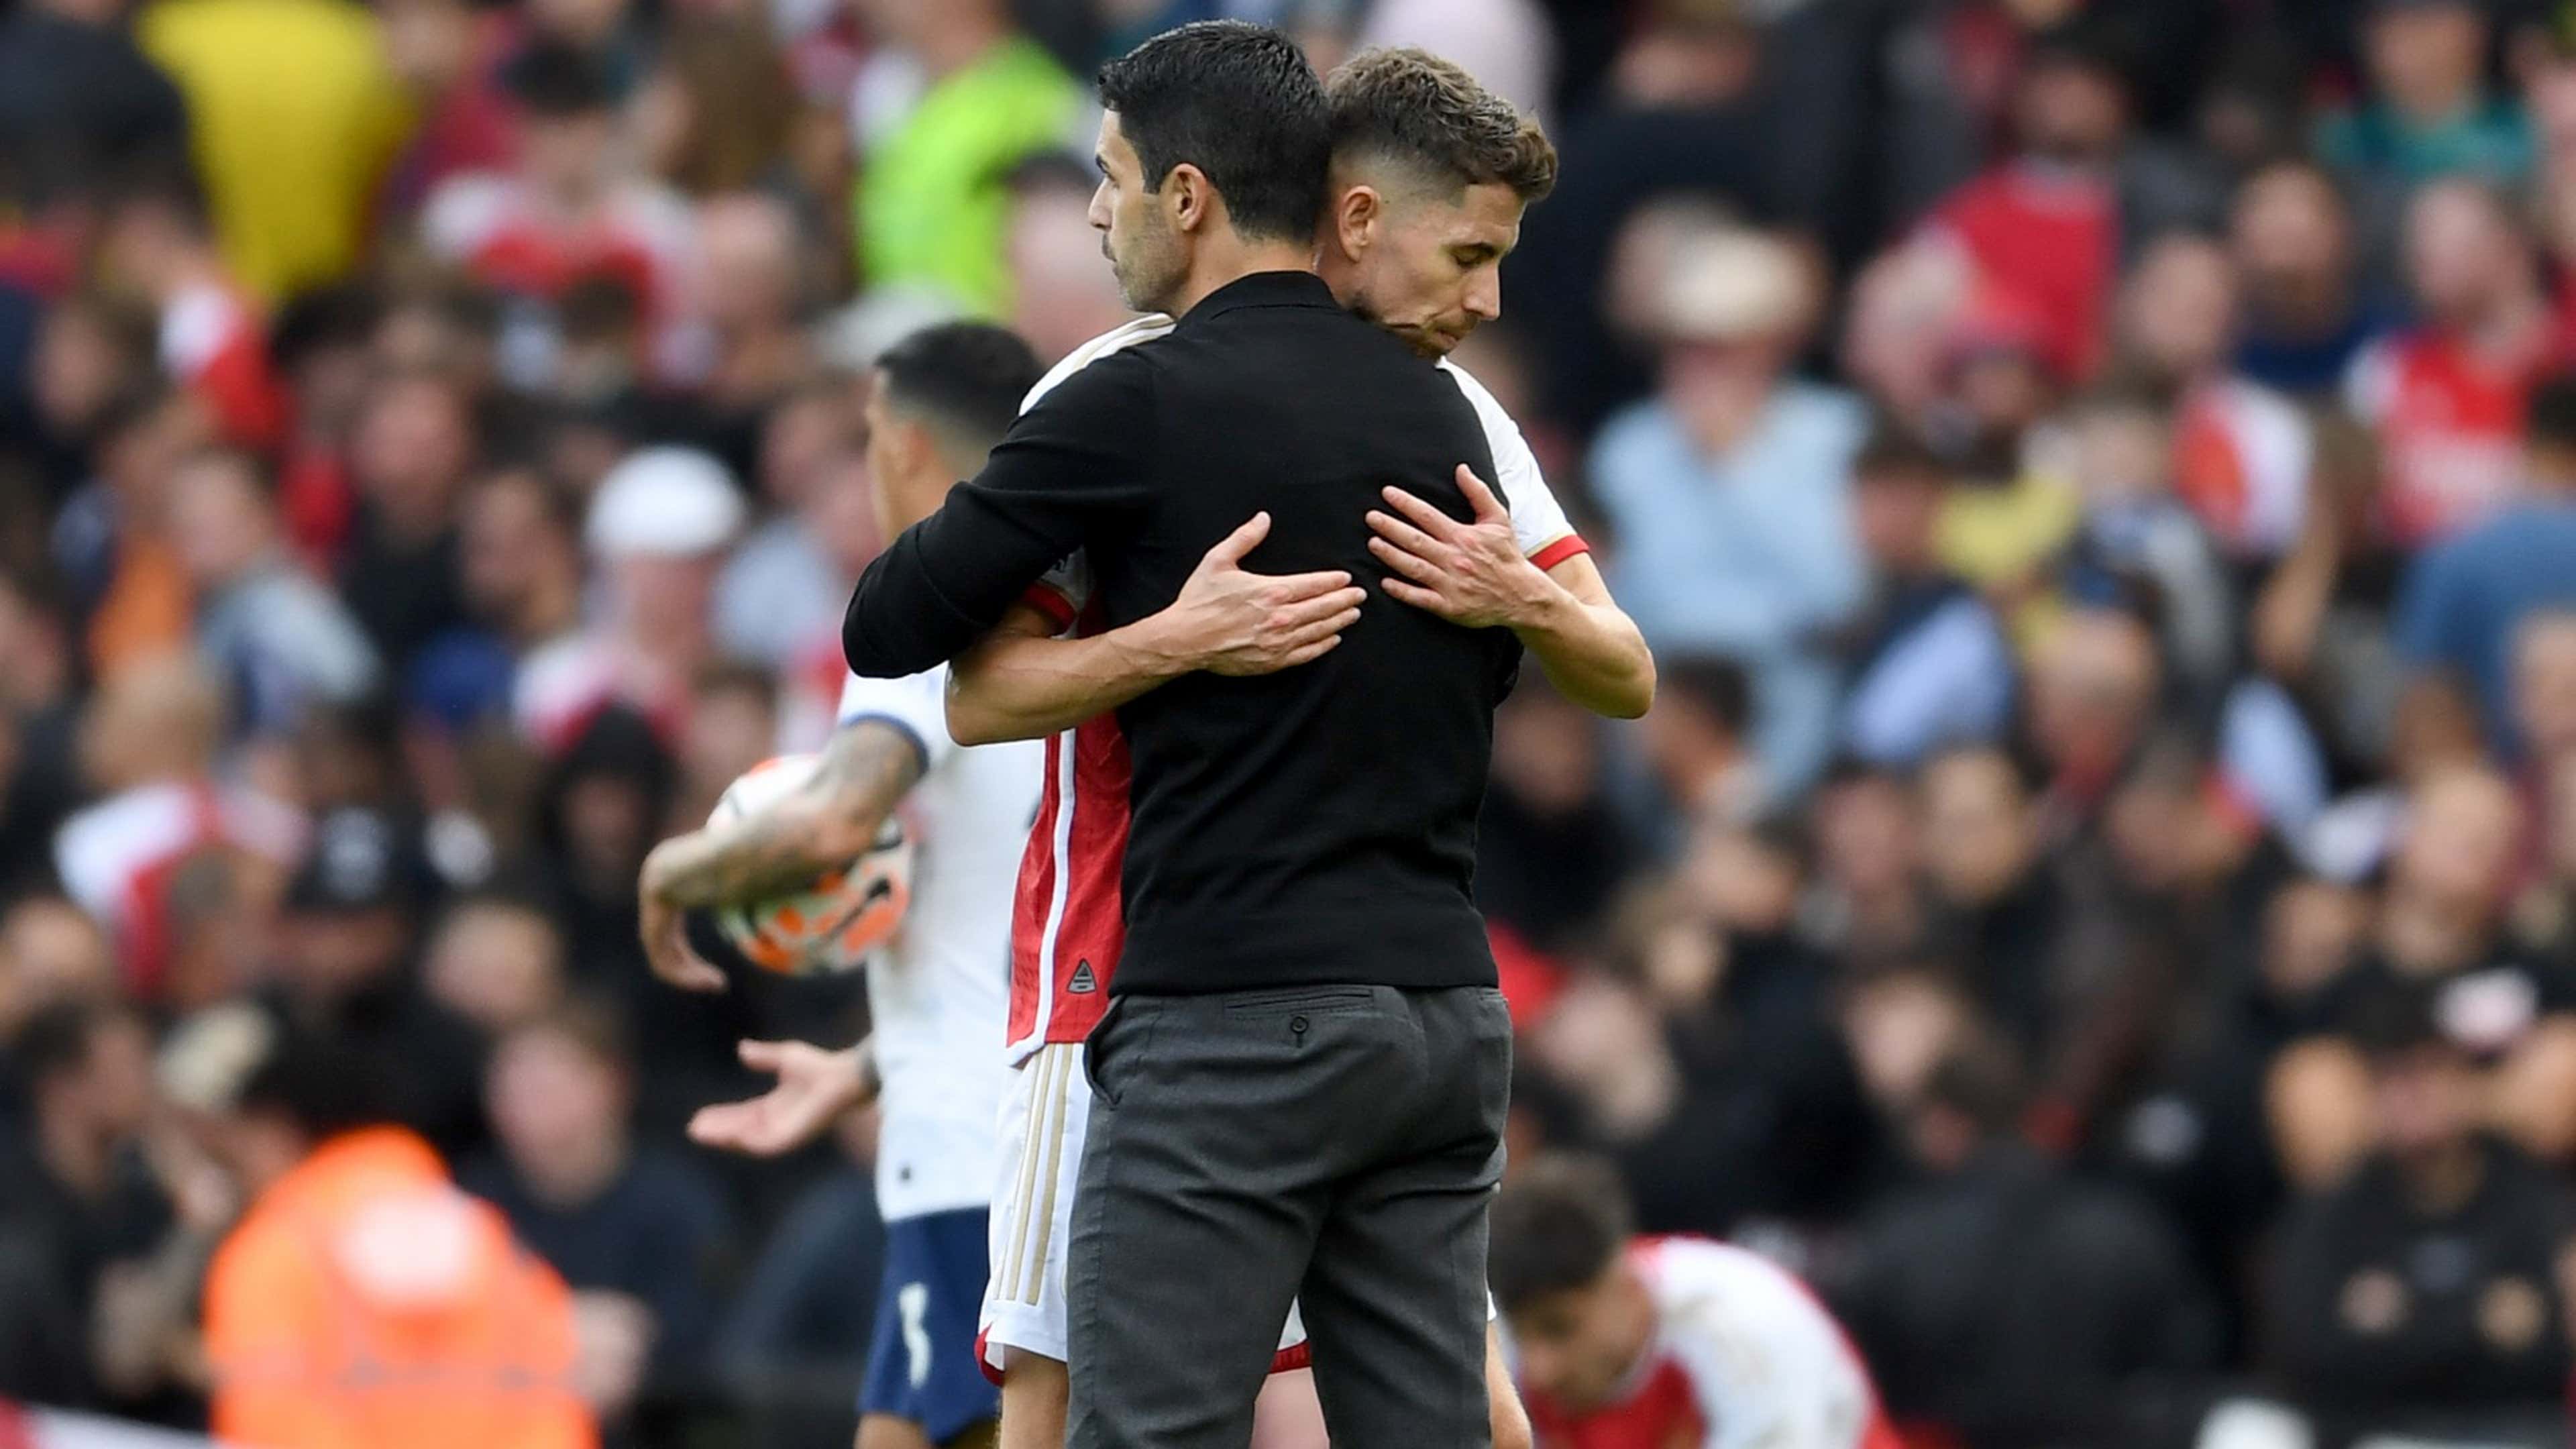 Arsenal's Jorginho remains patient despite lack of playing time